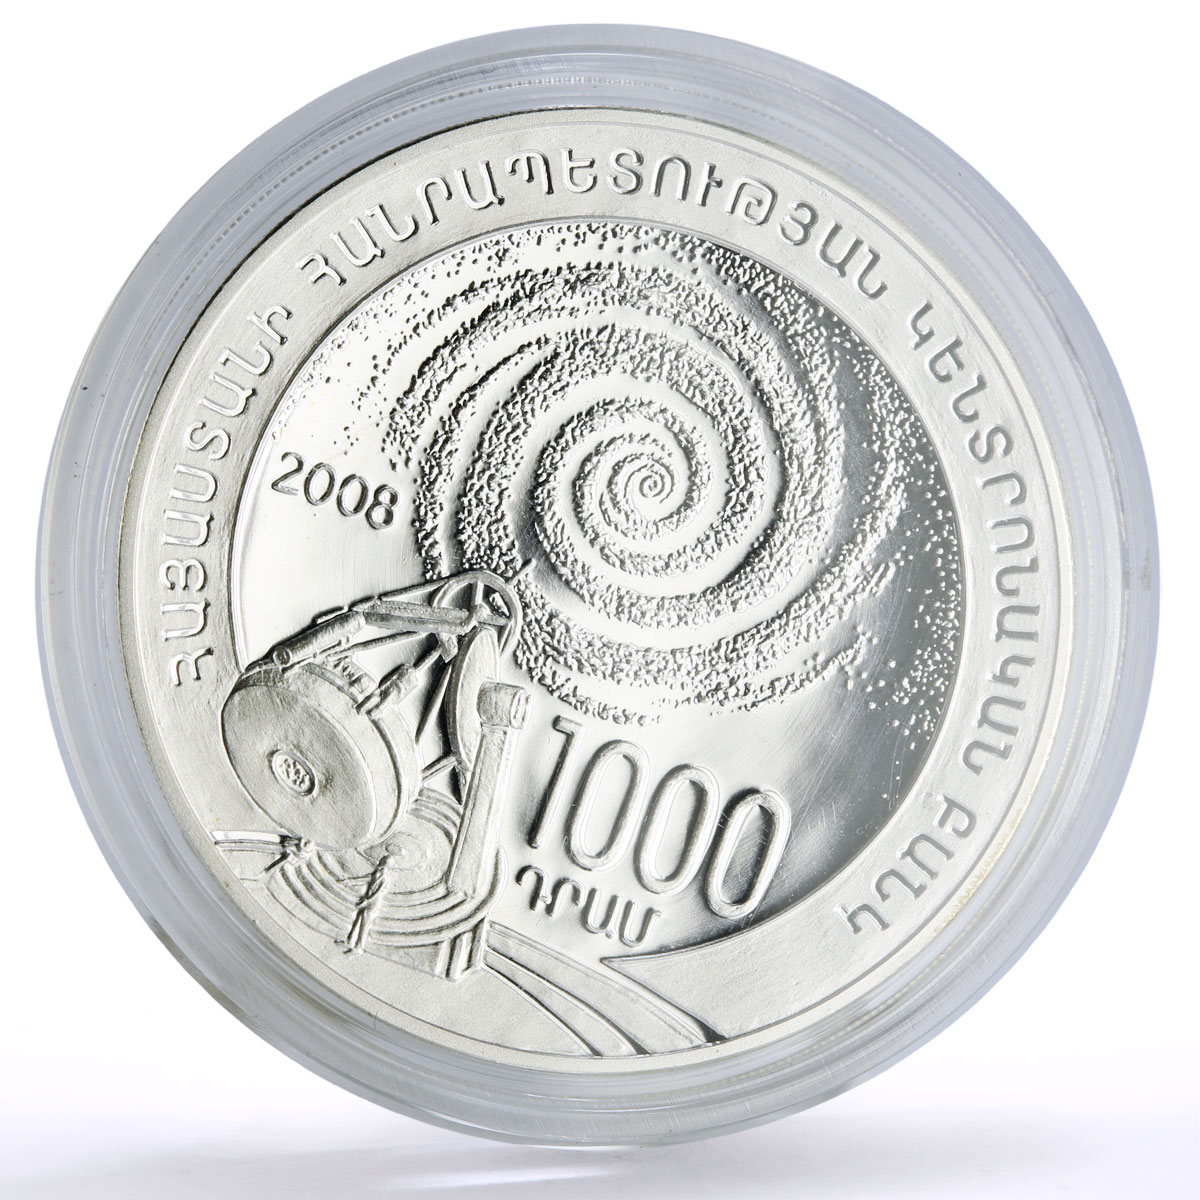 Armenia 1000 dram Astronomer Viktor Ambartsumian Science proof silver coin 2008